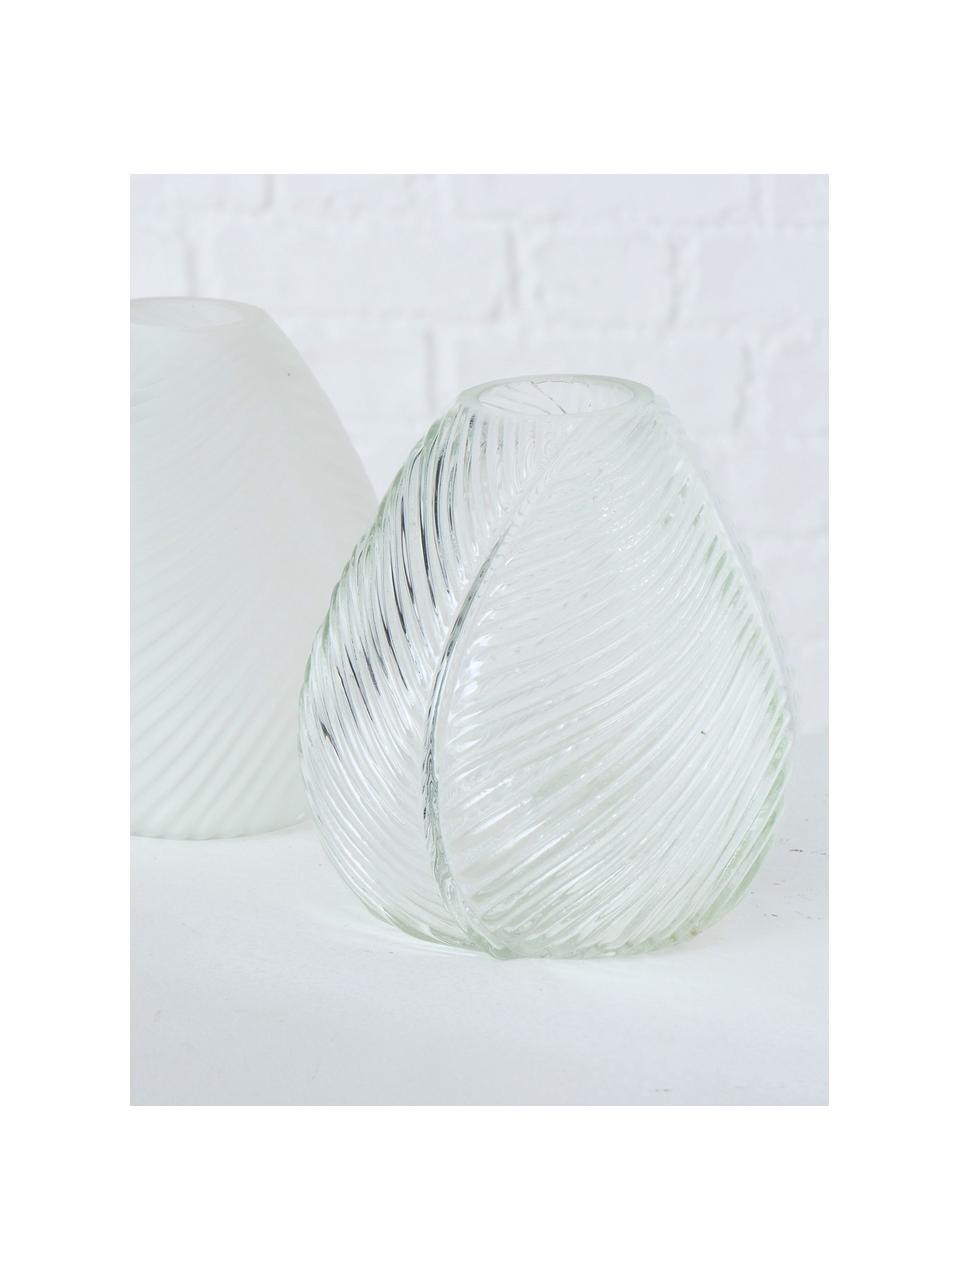 Glazen vazenset Lewin, 2-delig, Glas, Wit, transparant, Ø 14 x H 15 cm